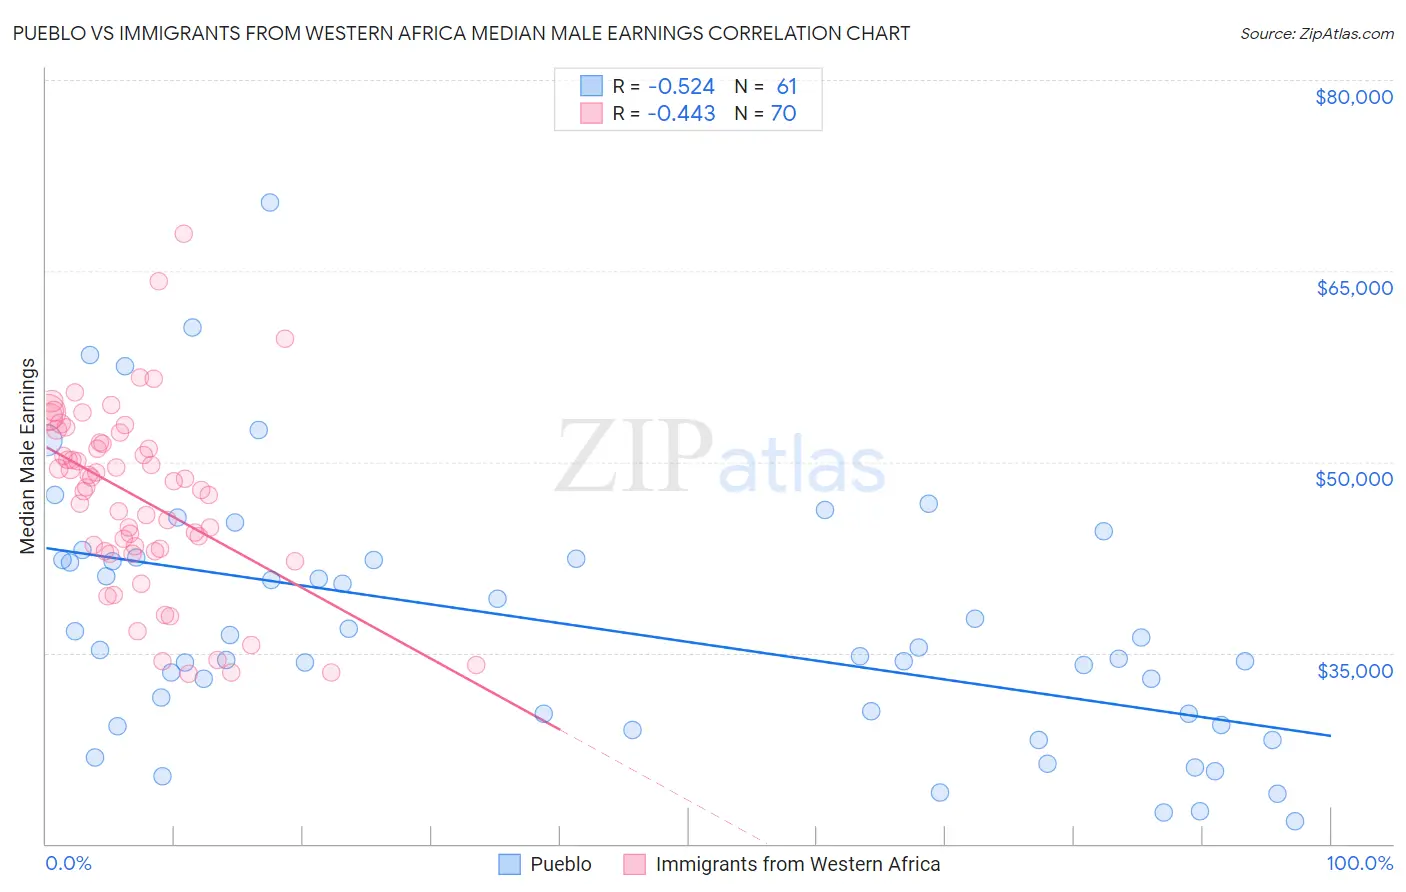 Pueblo vs Immigrants from Western Africa Median Male Earnings